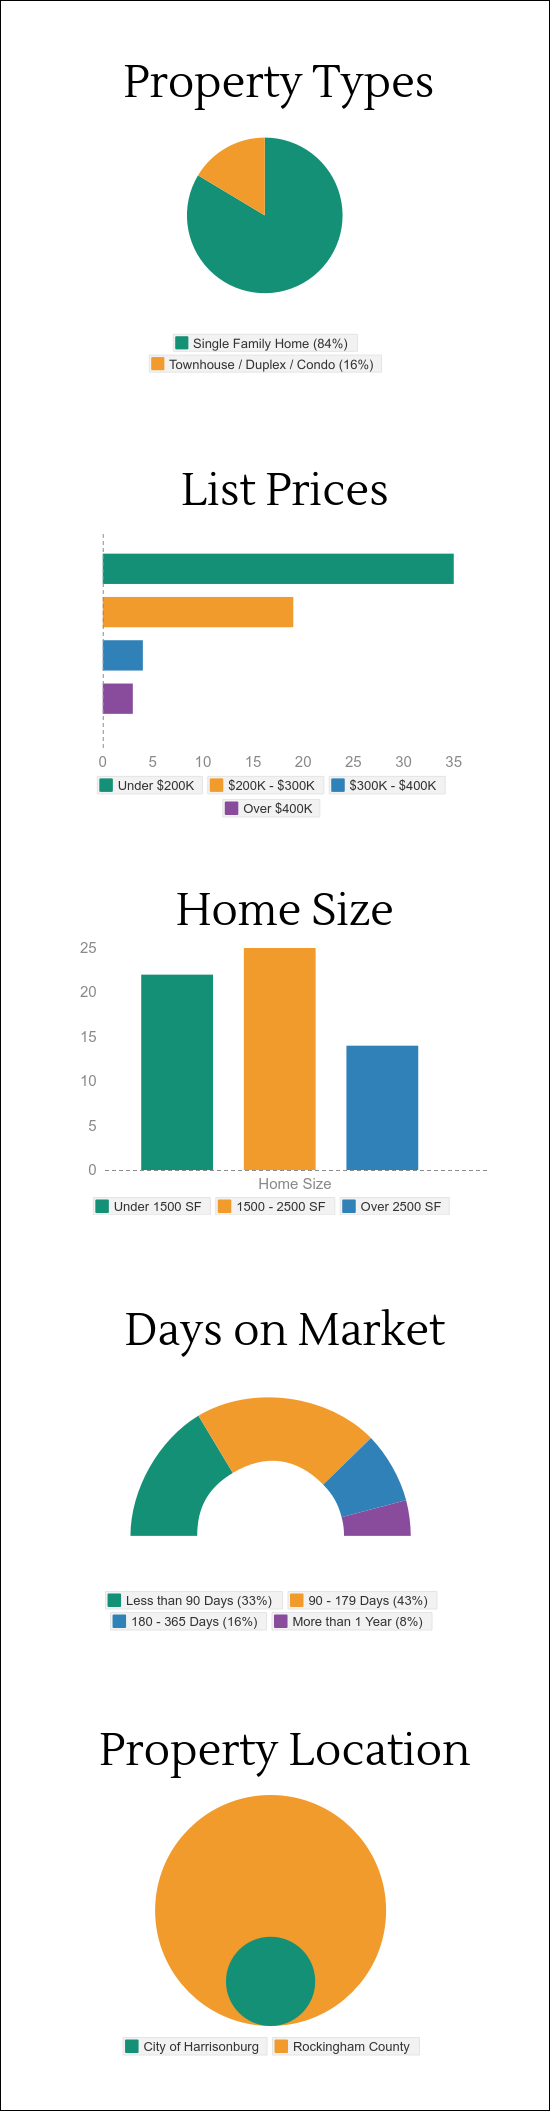 What did buyers buy in December 2014?